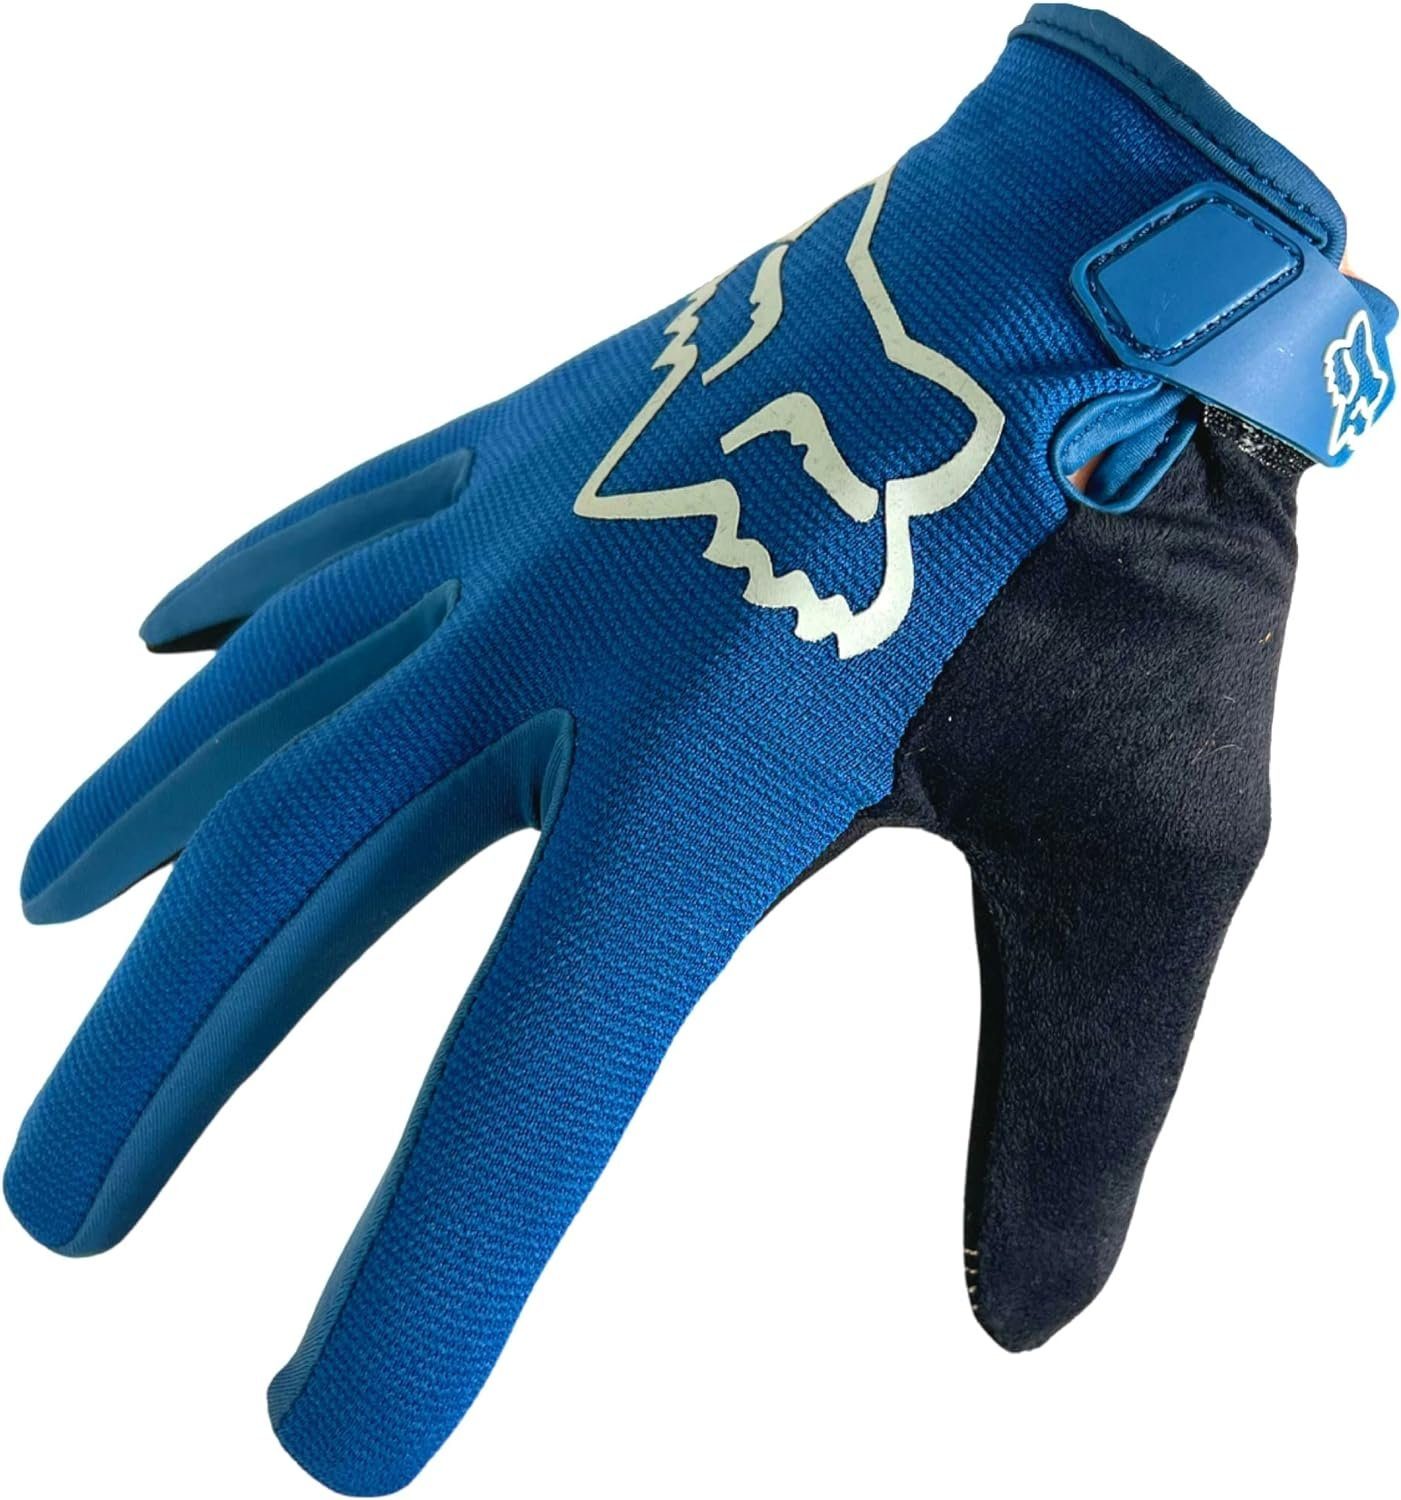 Handschuhe Fox Glove Ranger Indigo dark Fox Racing Motorradhandschuhe blau